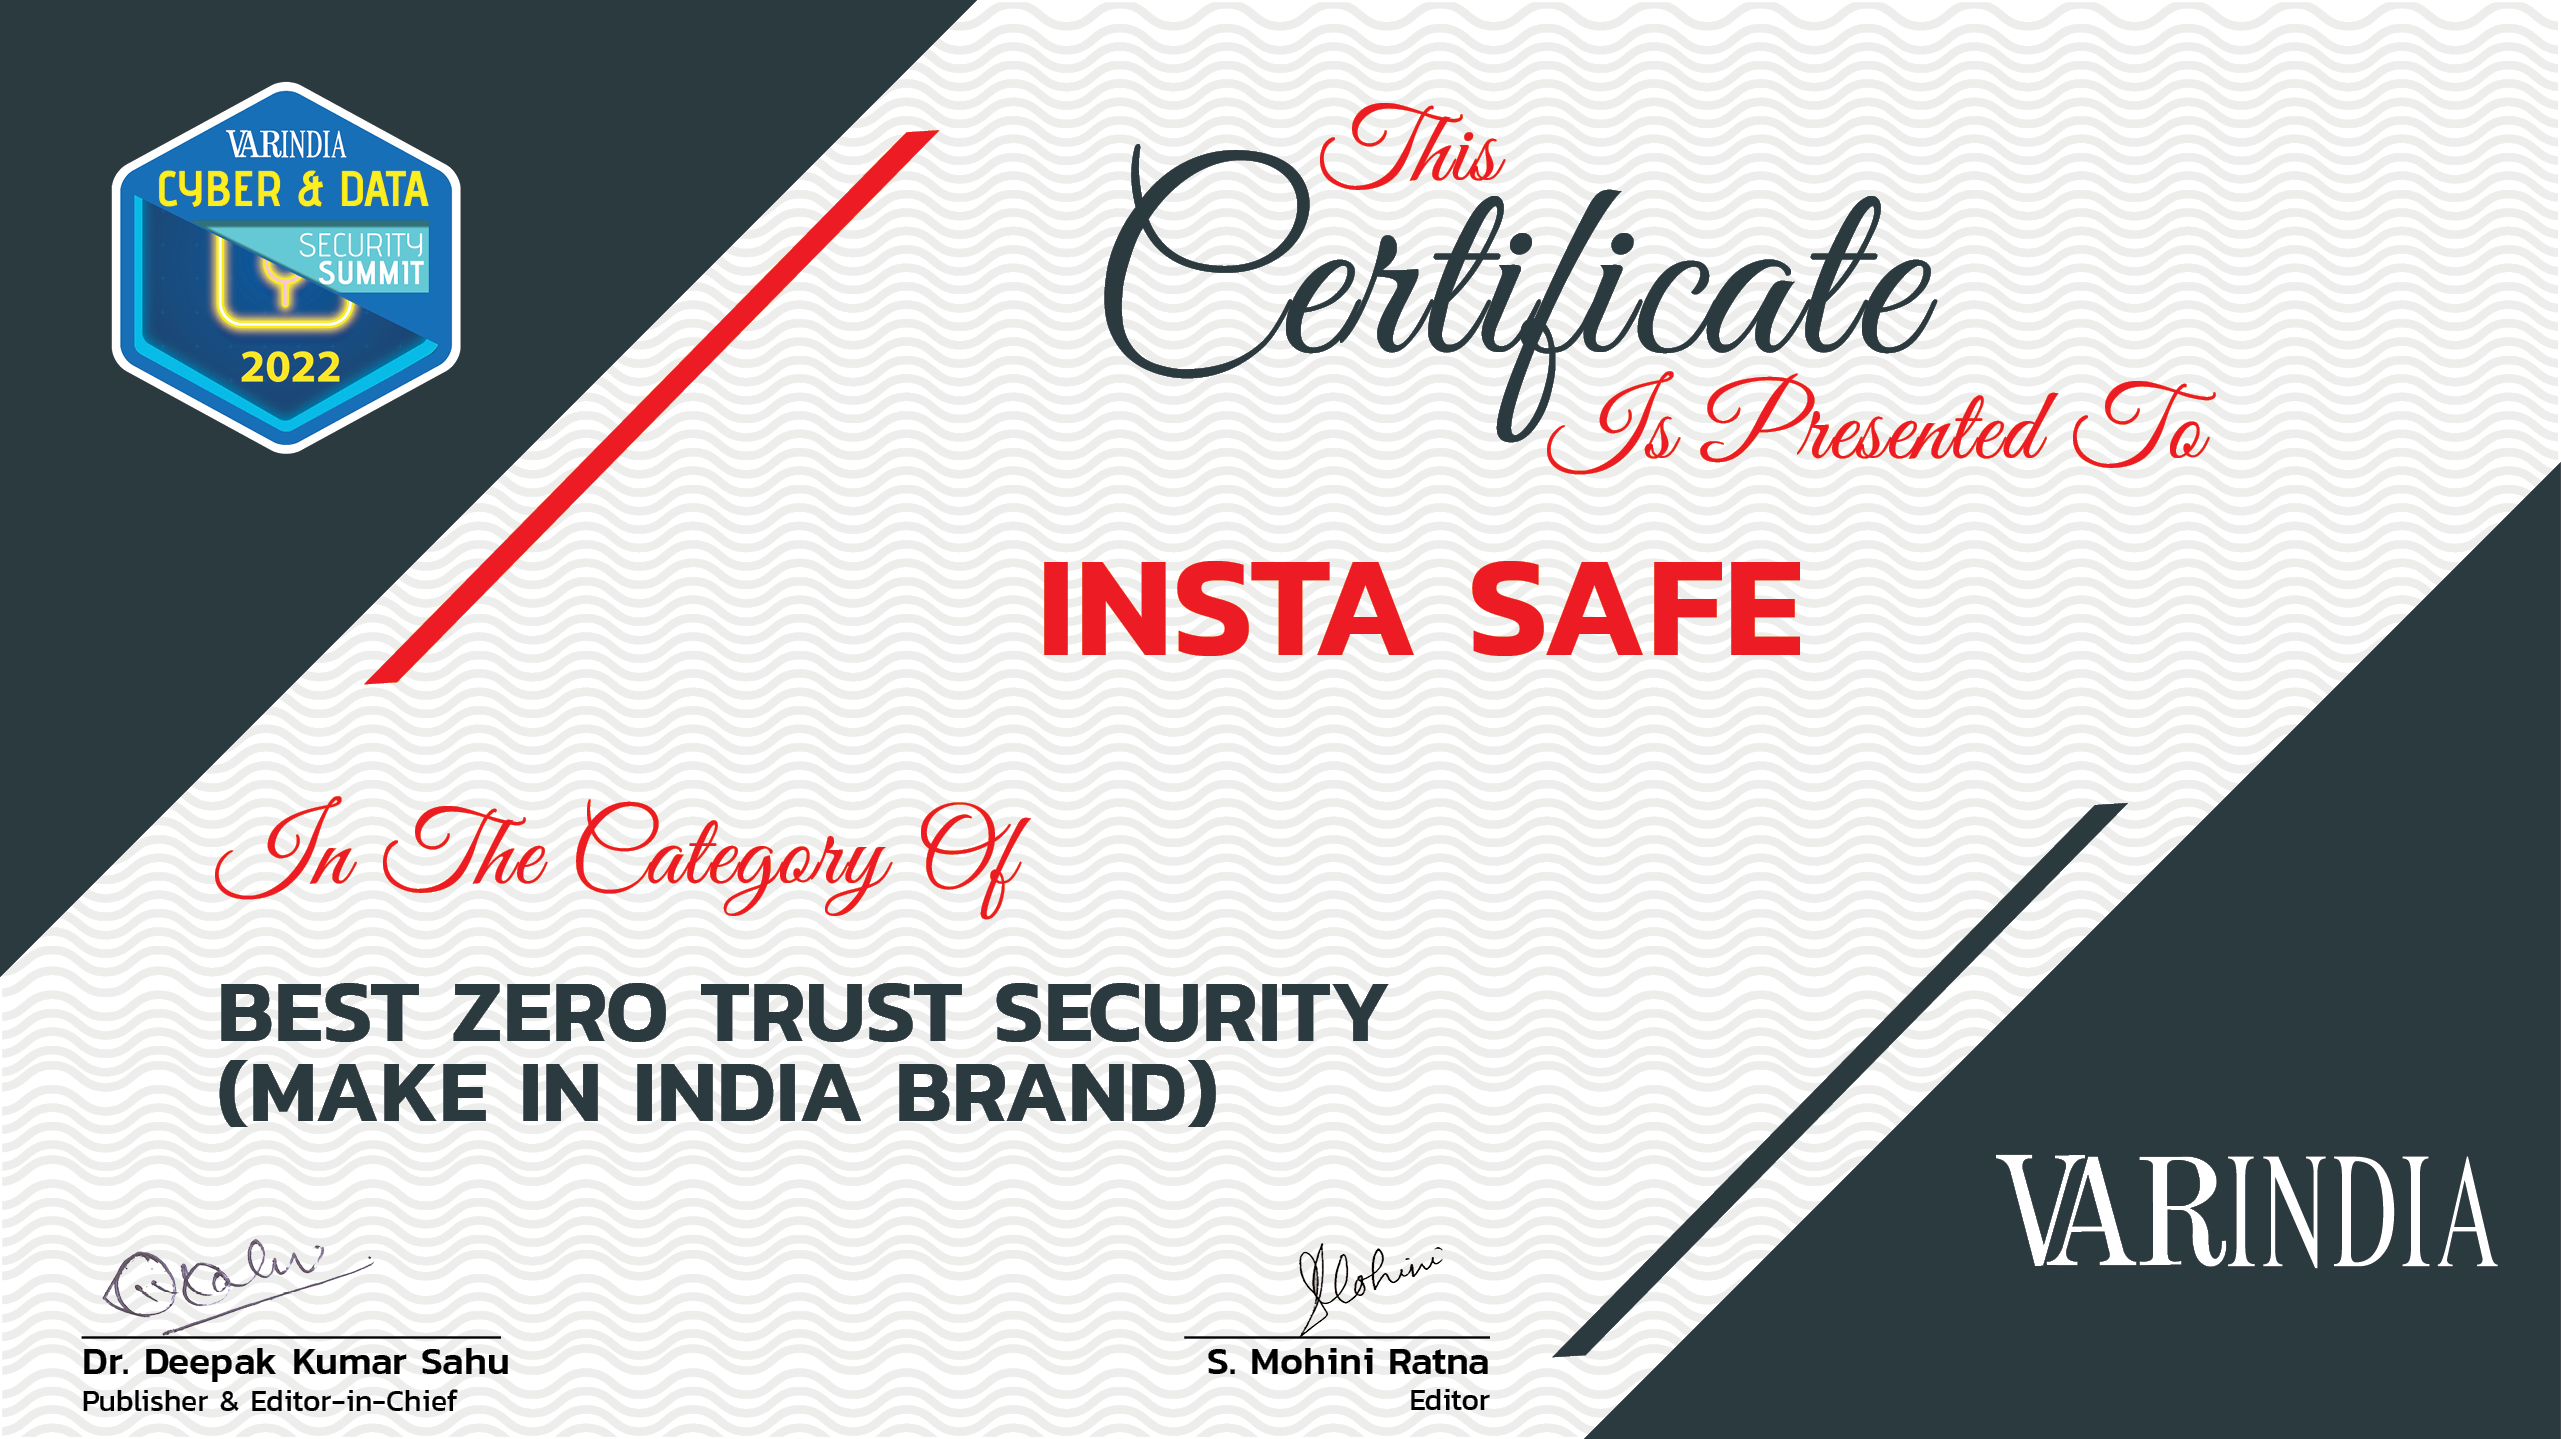 VARINDIA recognize Instasafe as  "Best Zero Trust Security Brand"